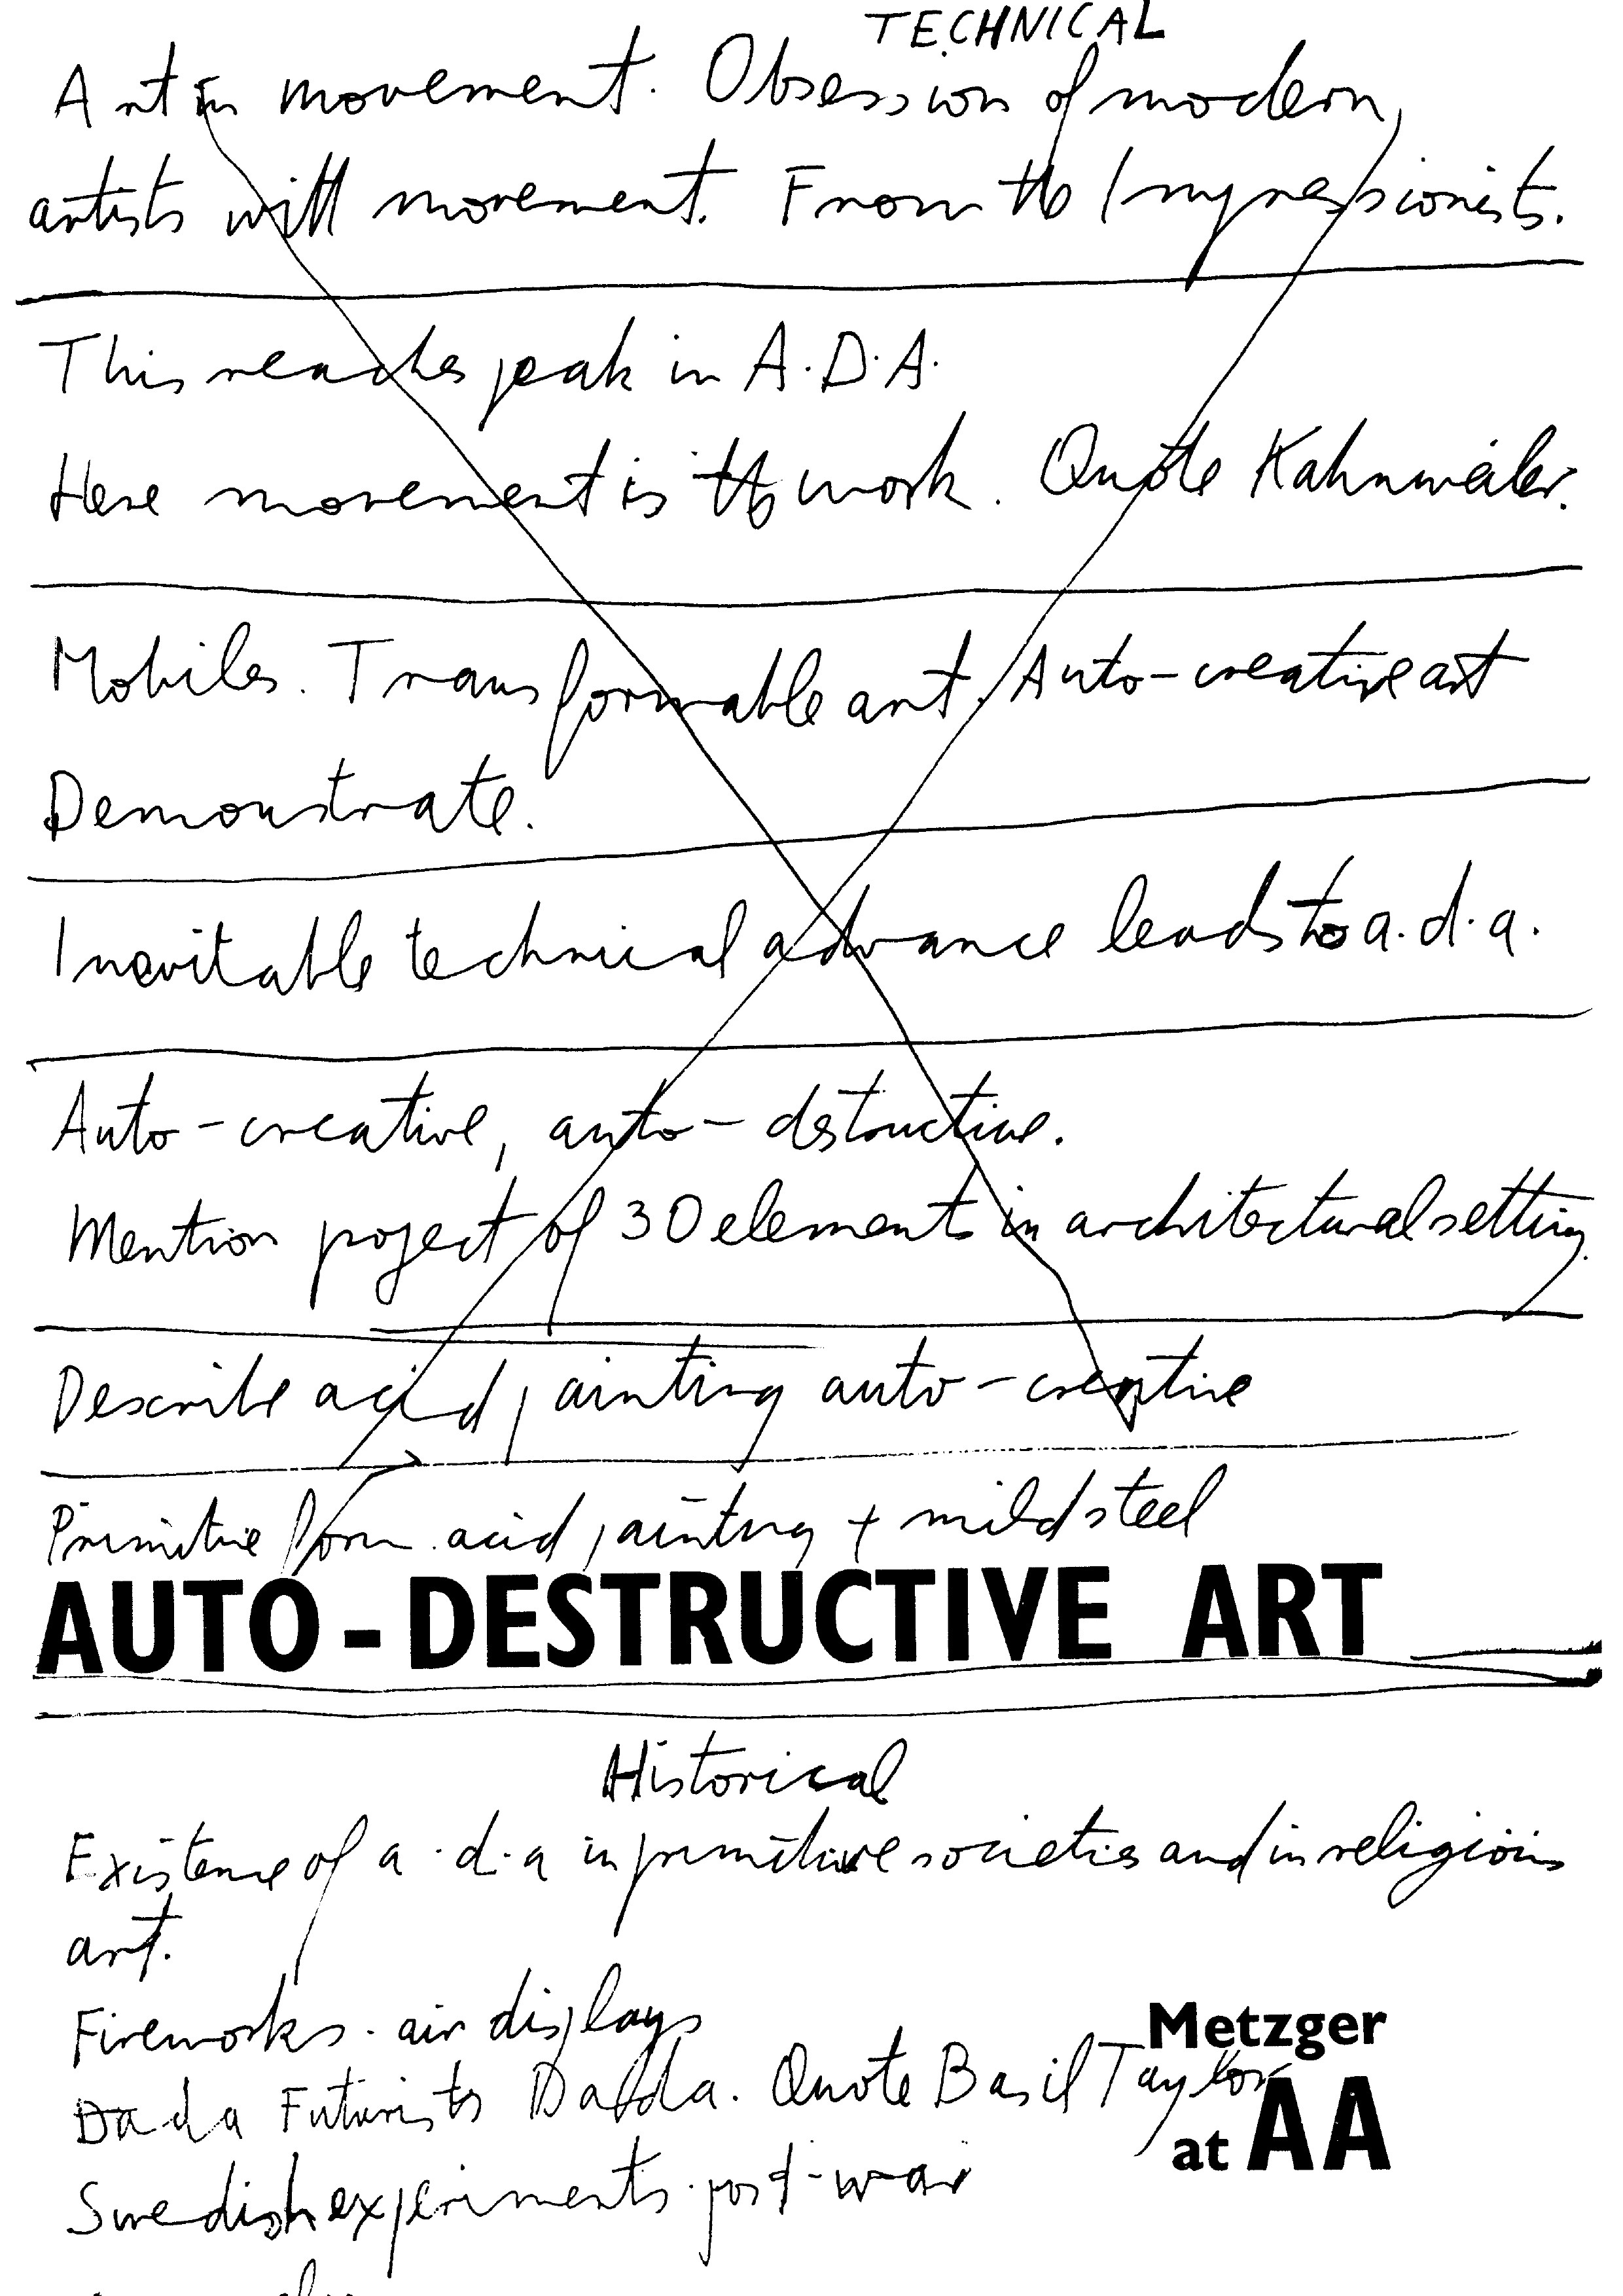 BOOK CLUB: AUTO-DESTRUCTIVE ART